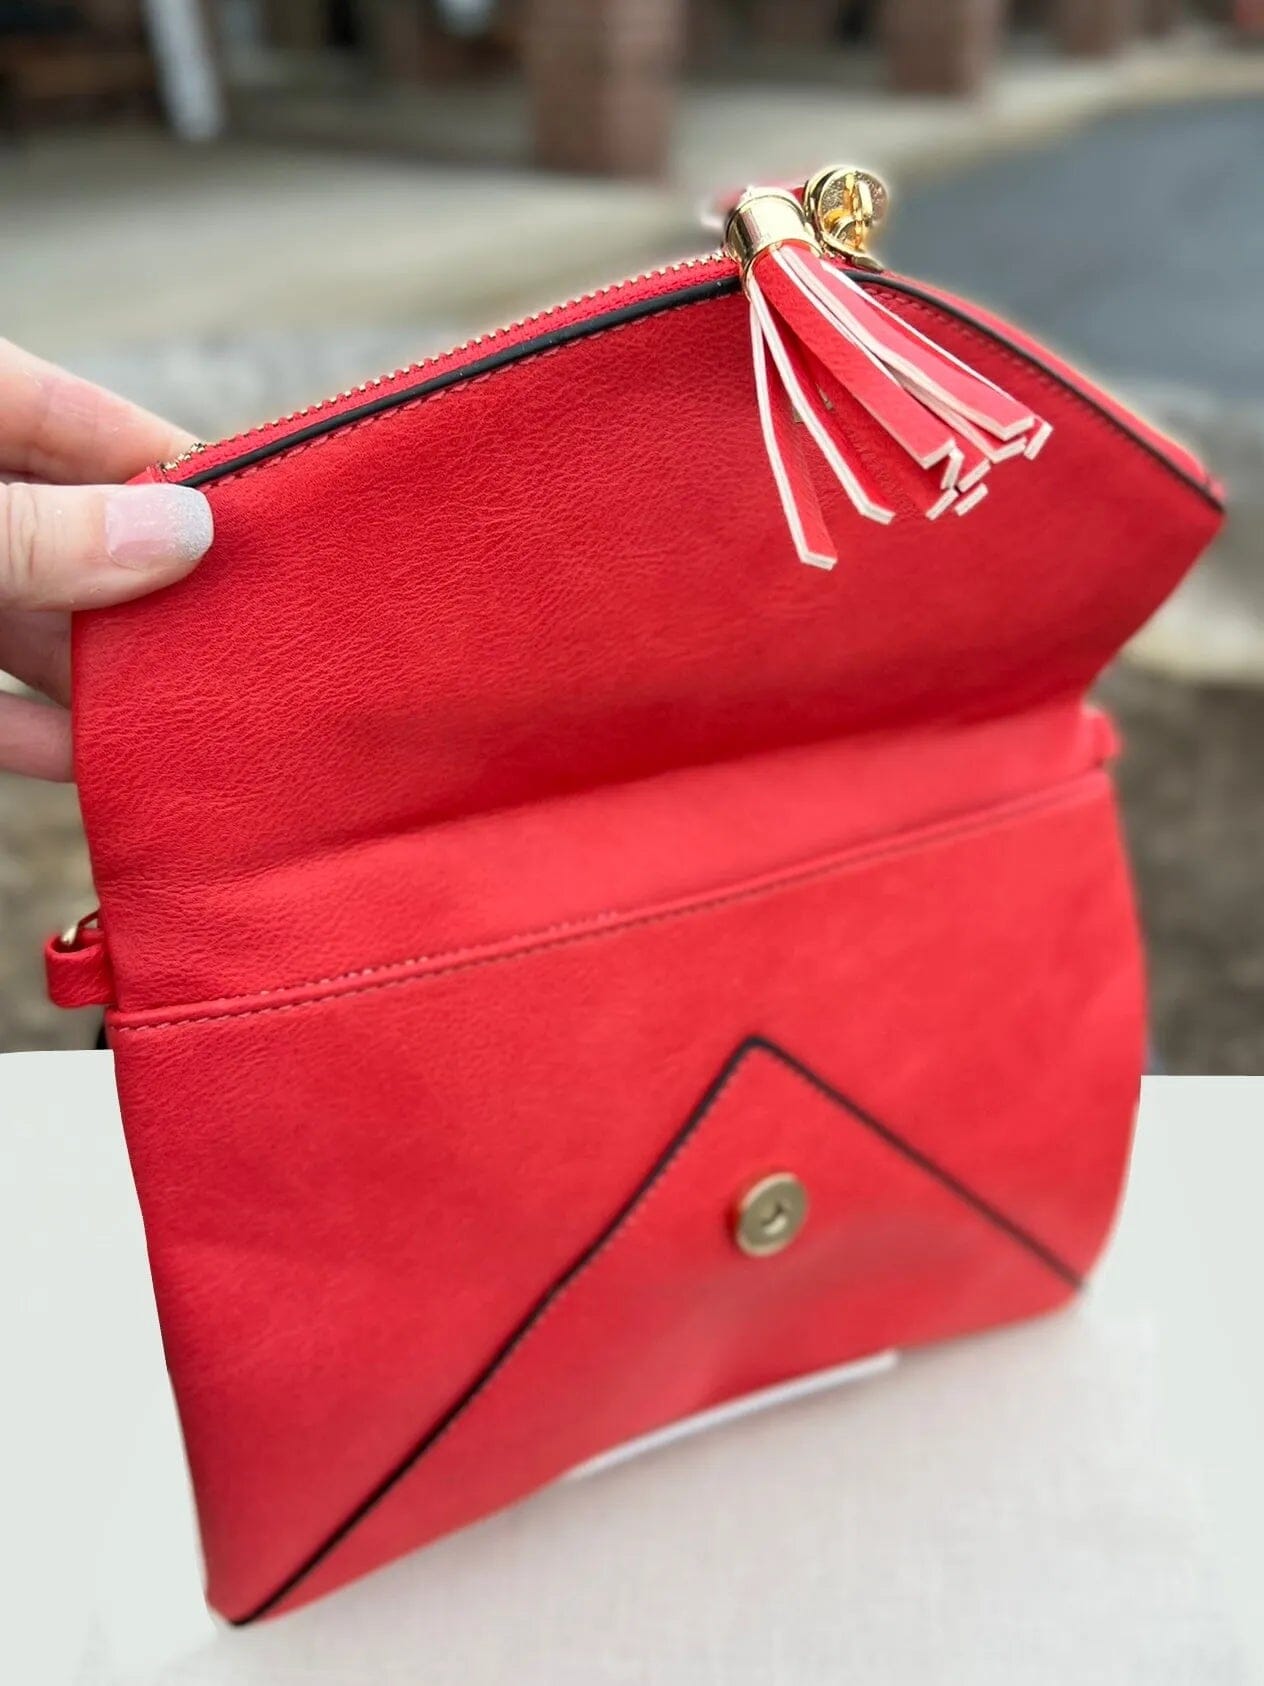 Envelope Style Foldover Clutch or Crossbody Handbag